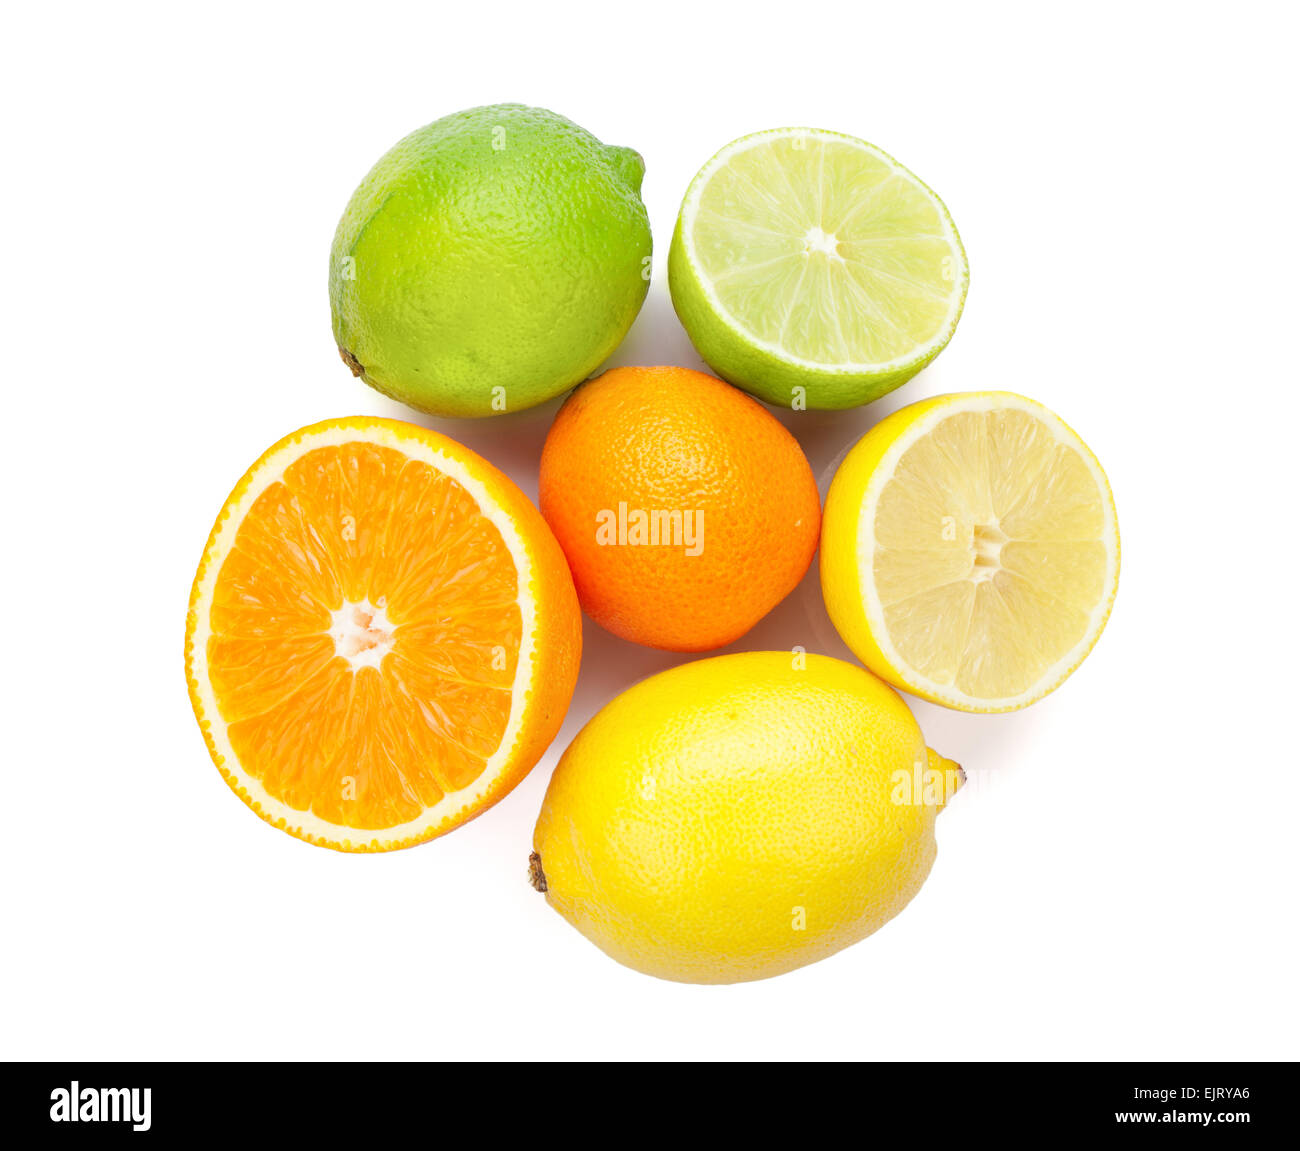 Citrus fruits. Oranges, limes and lemons. Isolated on white background Stock Photo